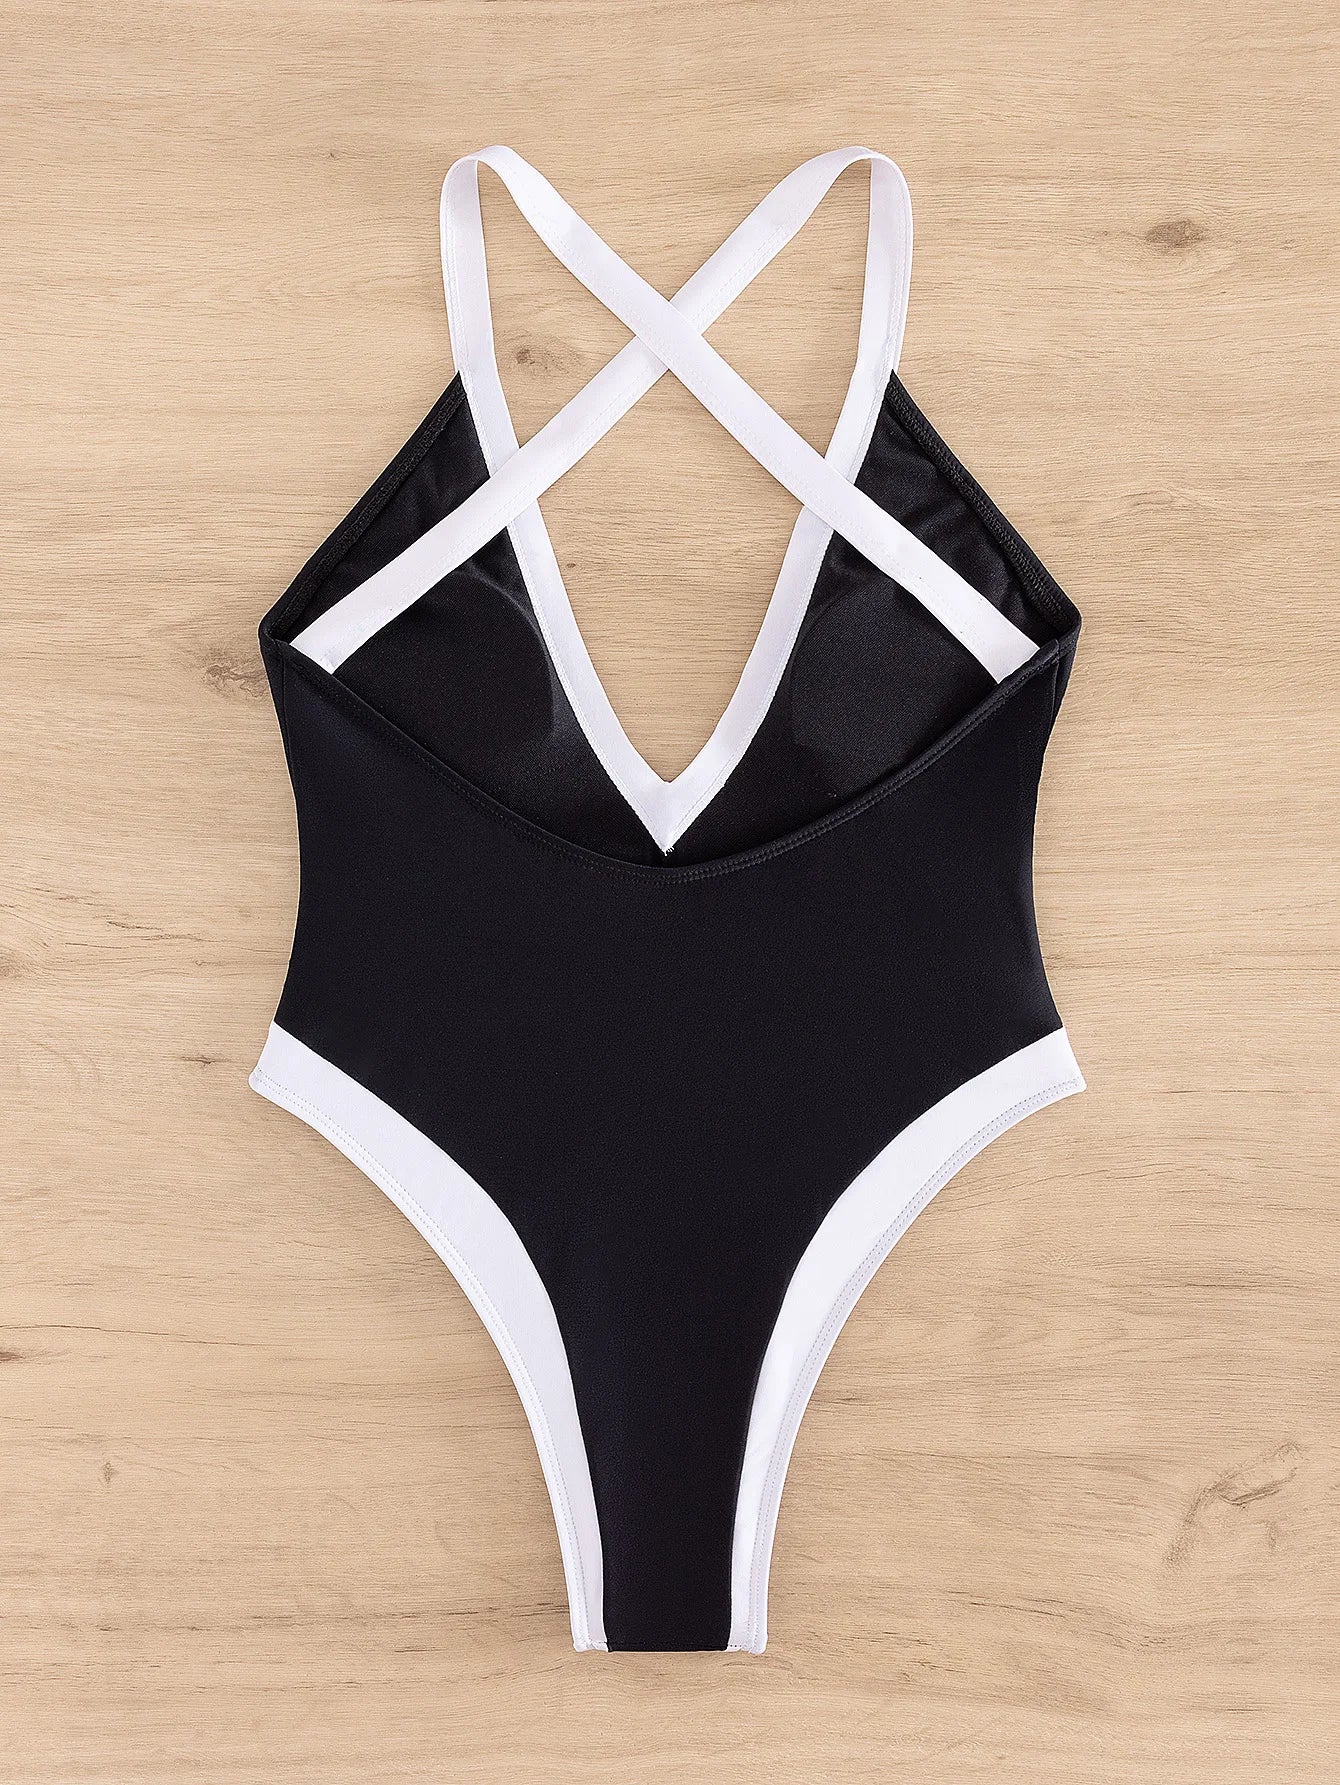 Swimwear- Women's One-Piece Swimwear with Contrast Binding for Aquatic Adventures